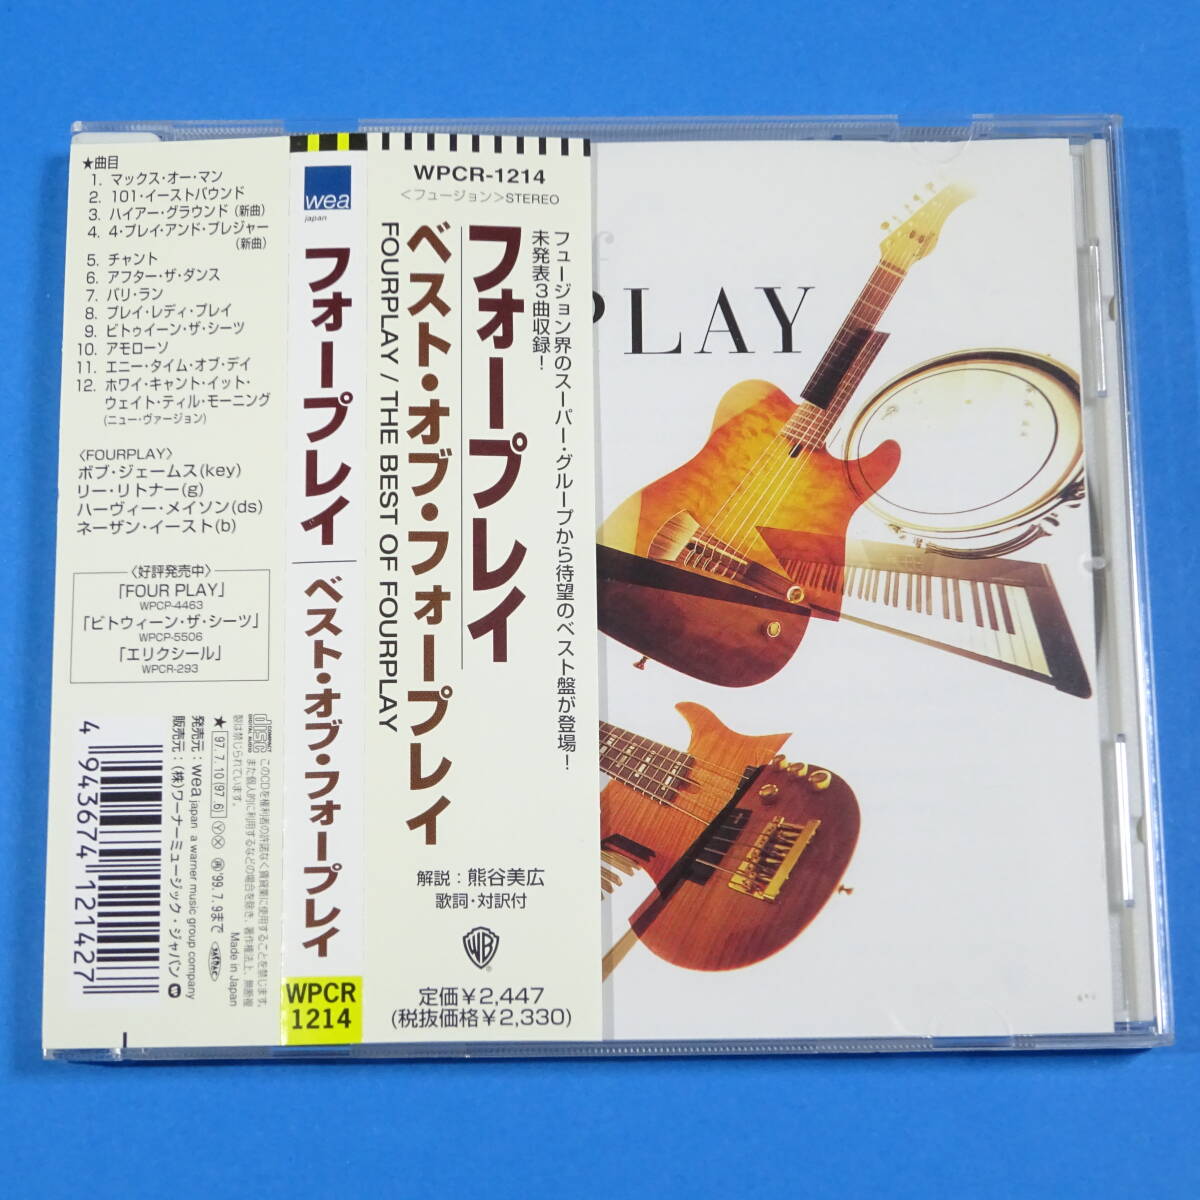 CD　フォープレイ / ベスト・オブ・フォープレイ　FOURPLAY / THE BEST OF FOURPLAY【非売品 見本盤】1997年 日本盤 フュージョン ベスト盤_画像1